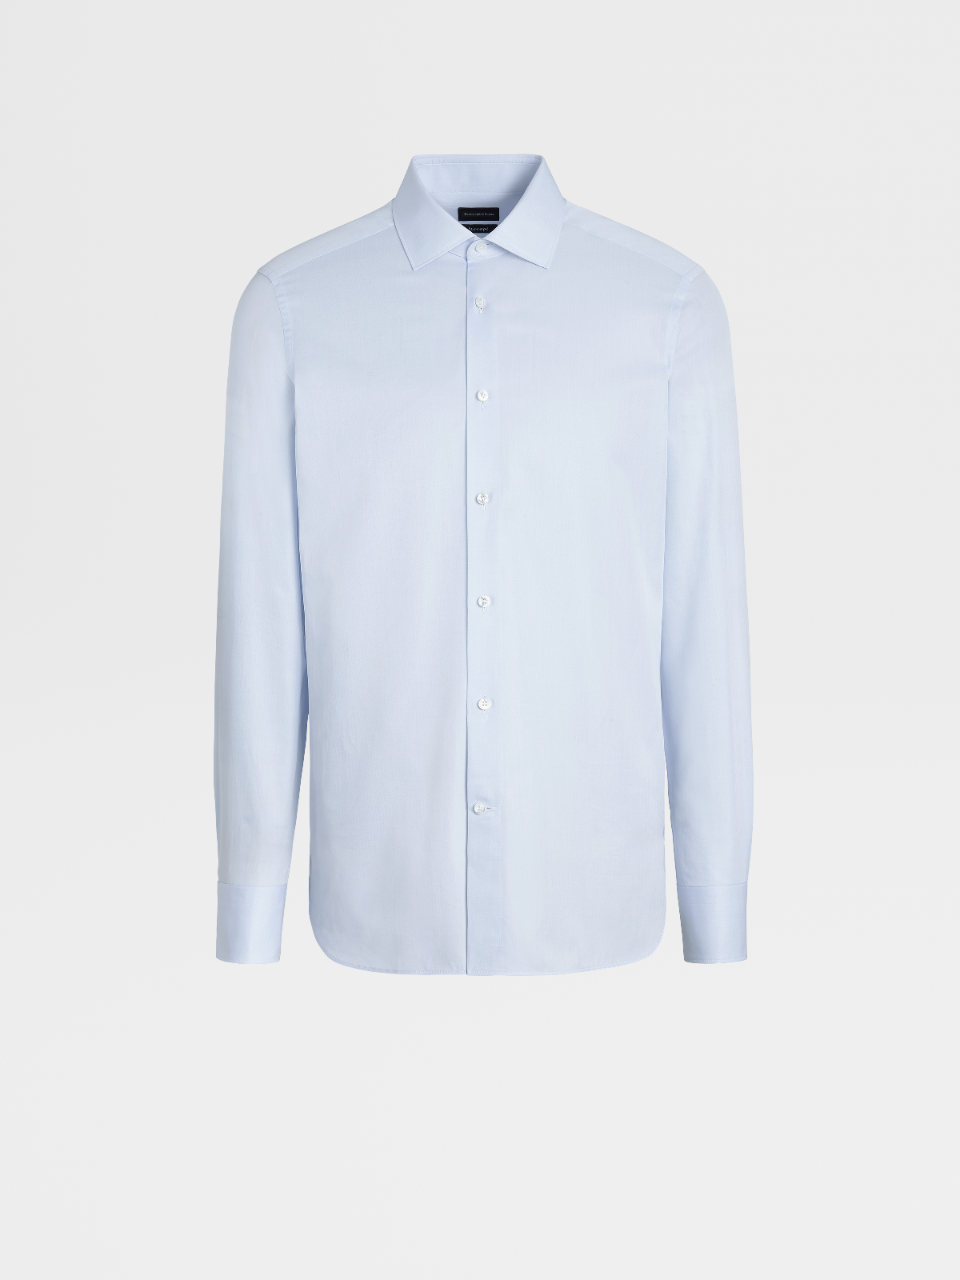 Striped Light Blue Trecapi Cotton Tailoring Shirt, Milano Regular Fit